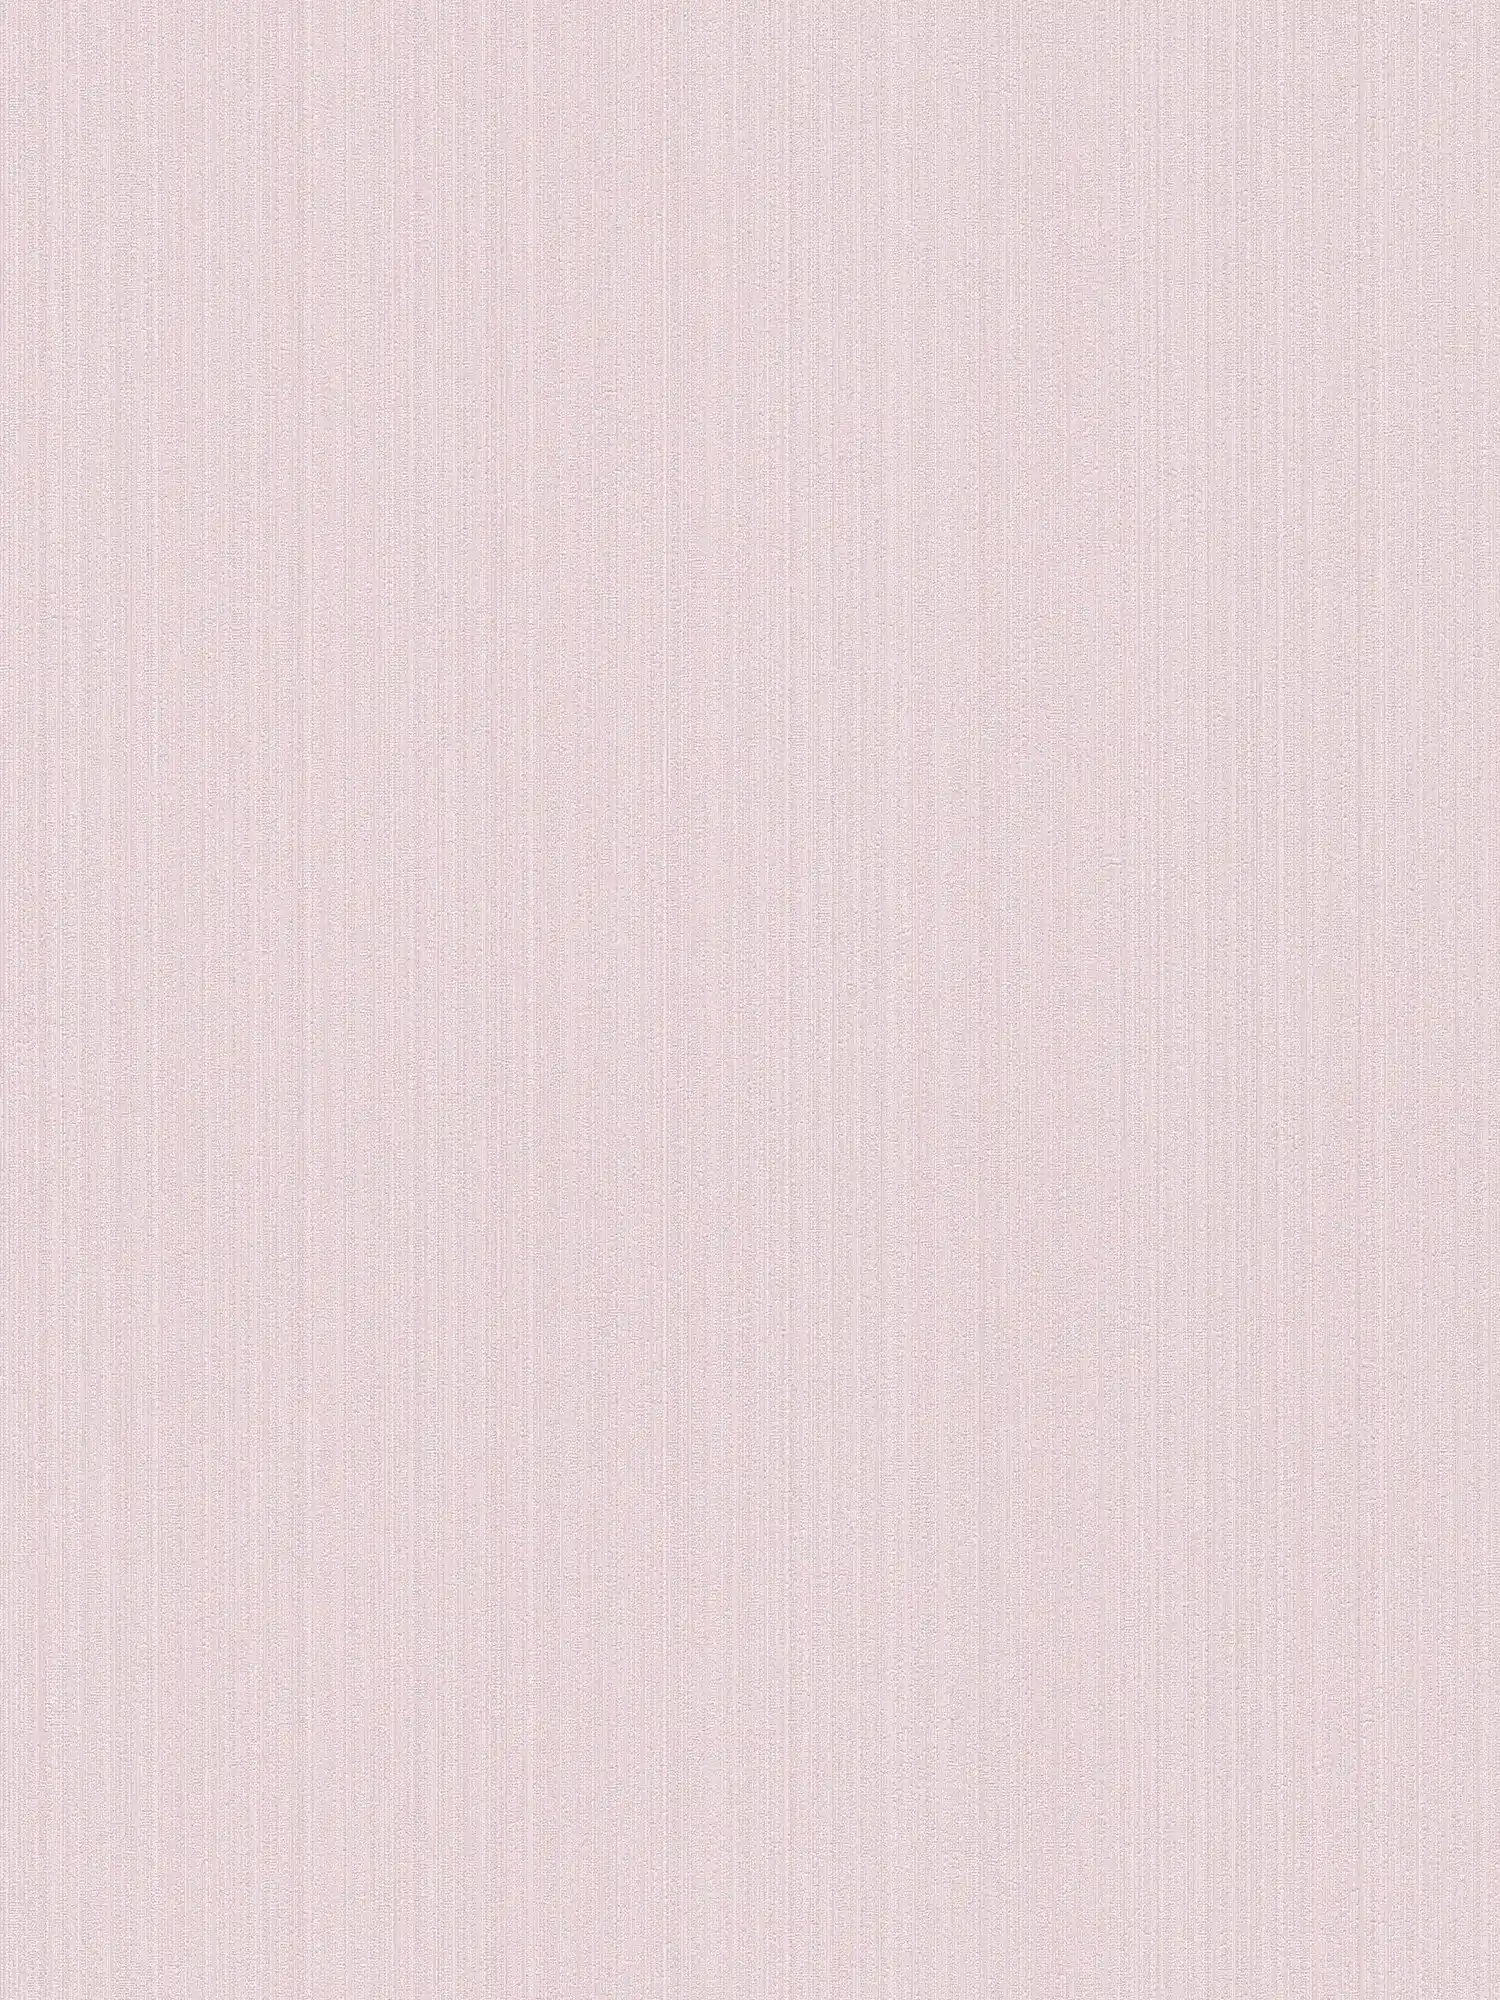 Papel pintado de seda rosa mate, liso con efecto de estructura
